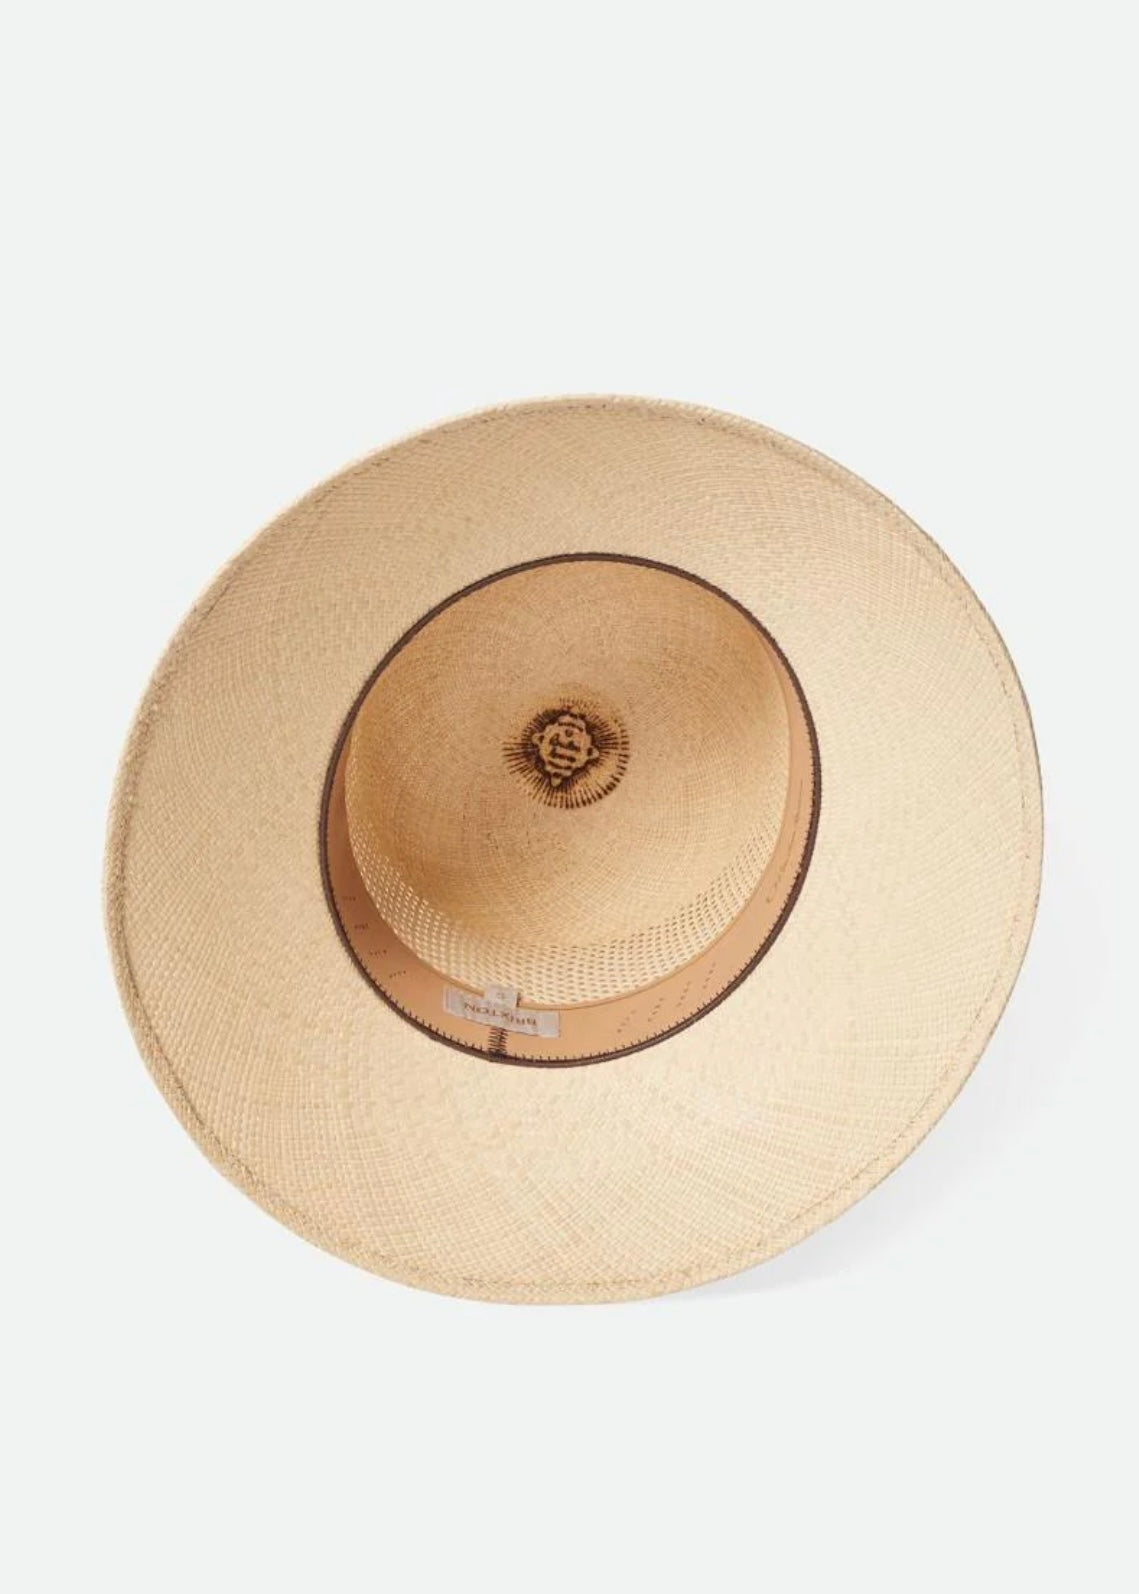 Lopez Panama Straw Hat